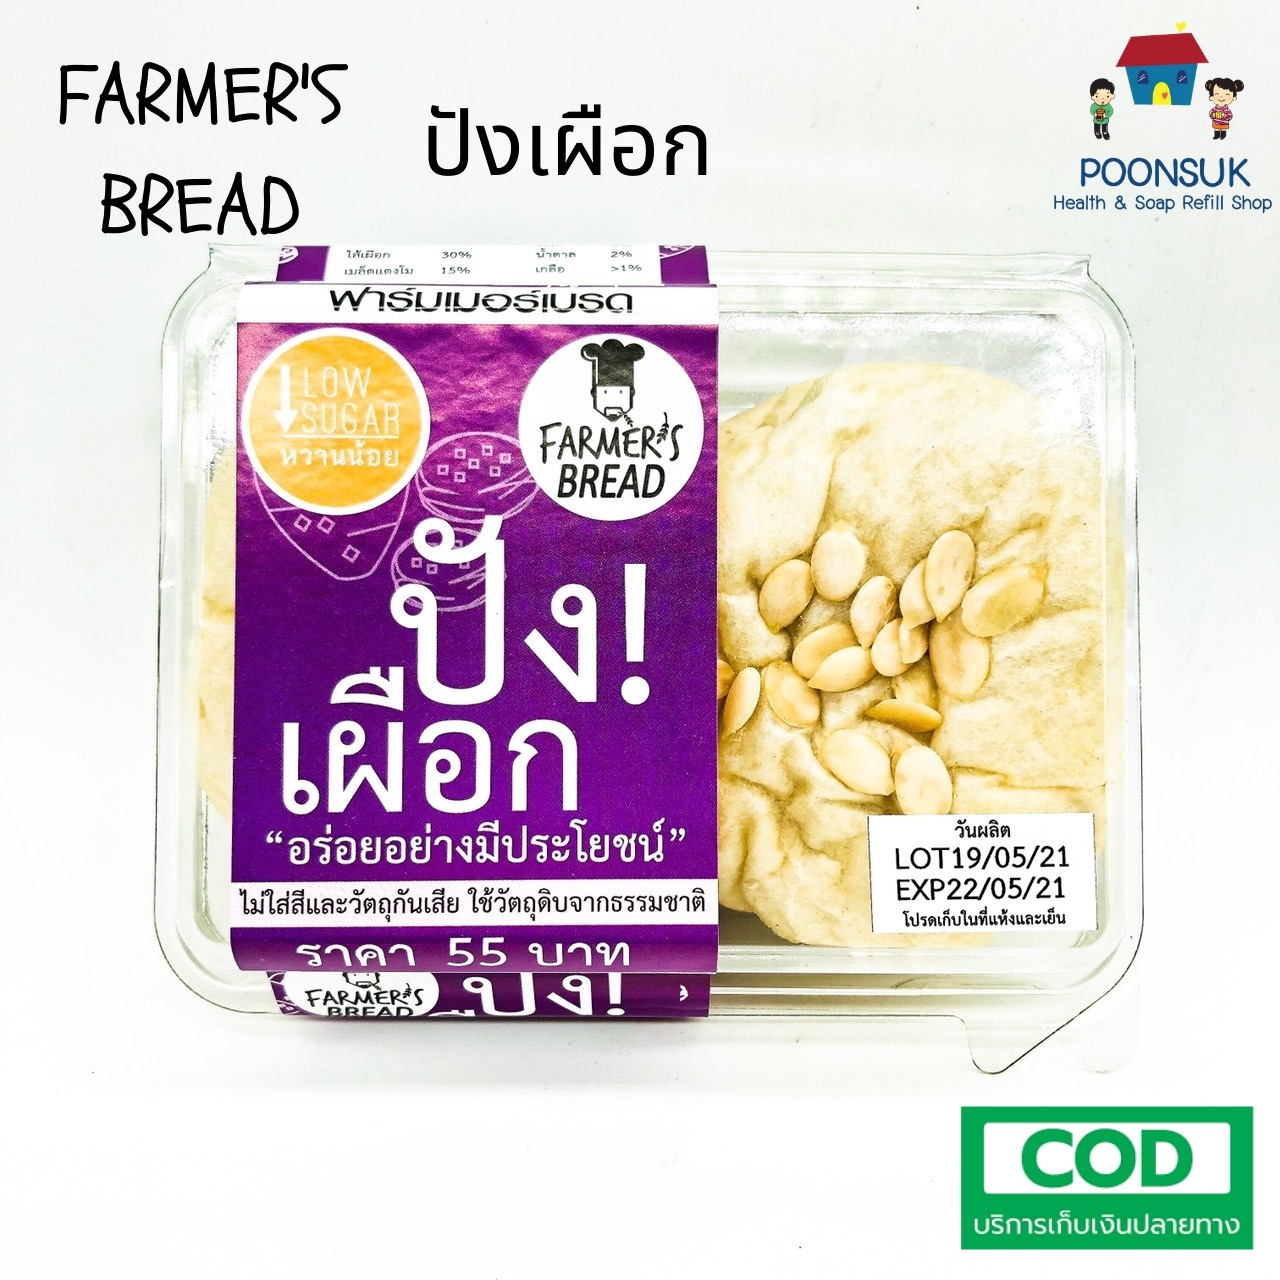 FARMER'S BREAD ฟาร์มเมอร์ เบรด ปังเผือก ขนมปังไส้เผือก  ไม่ใส่สี ไม่ใส่วัตถุกันเสีย อร่อยอย่างมีประโยชน์ 190g